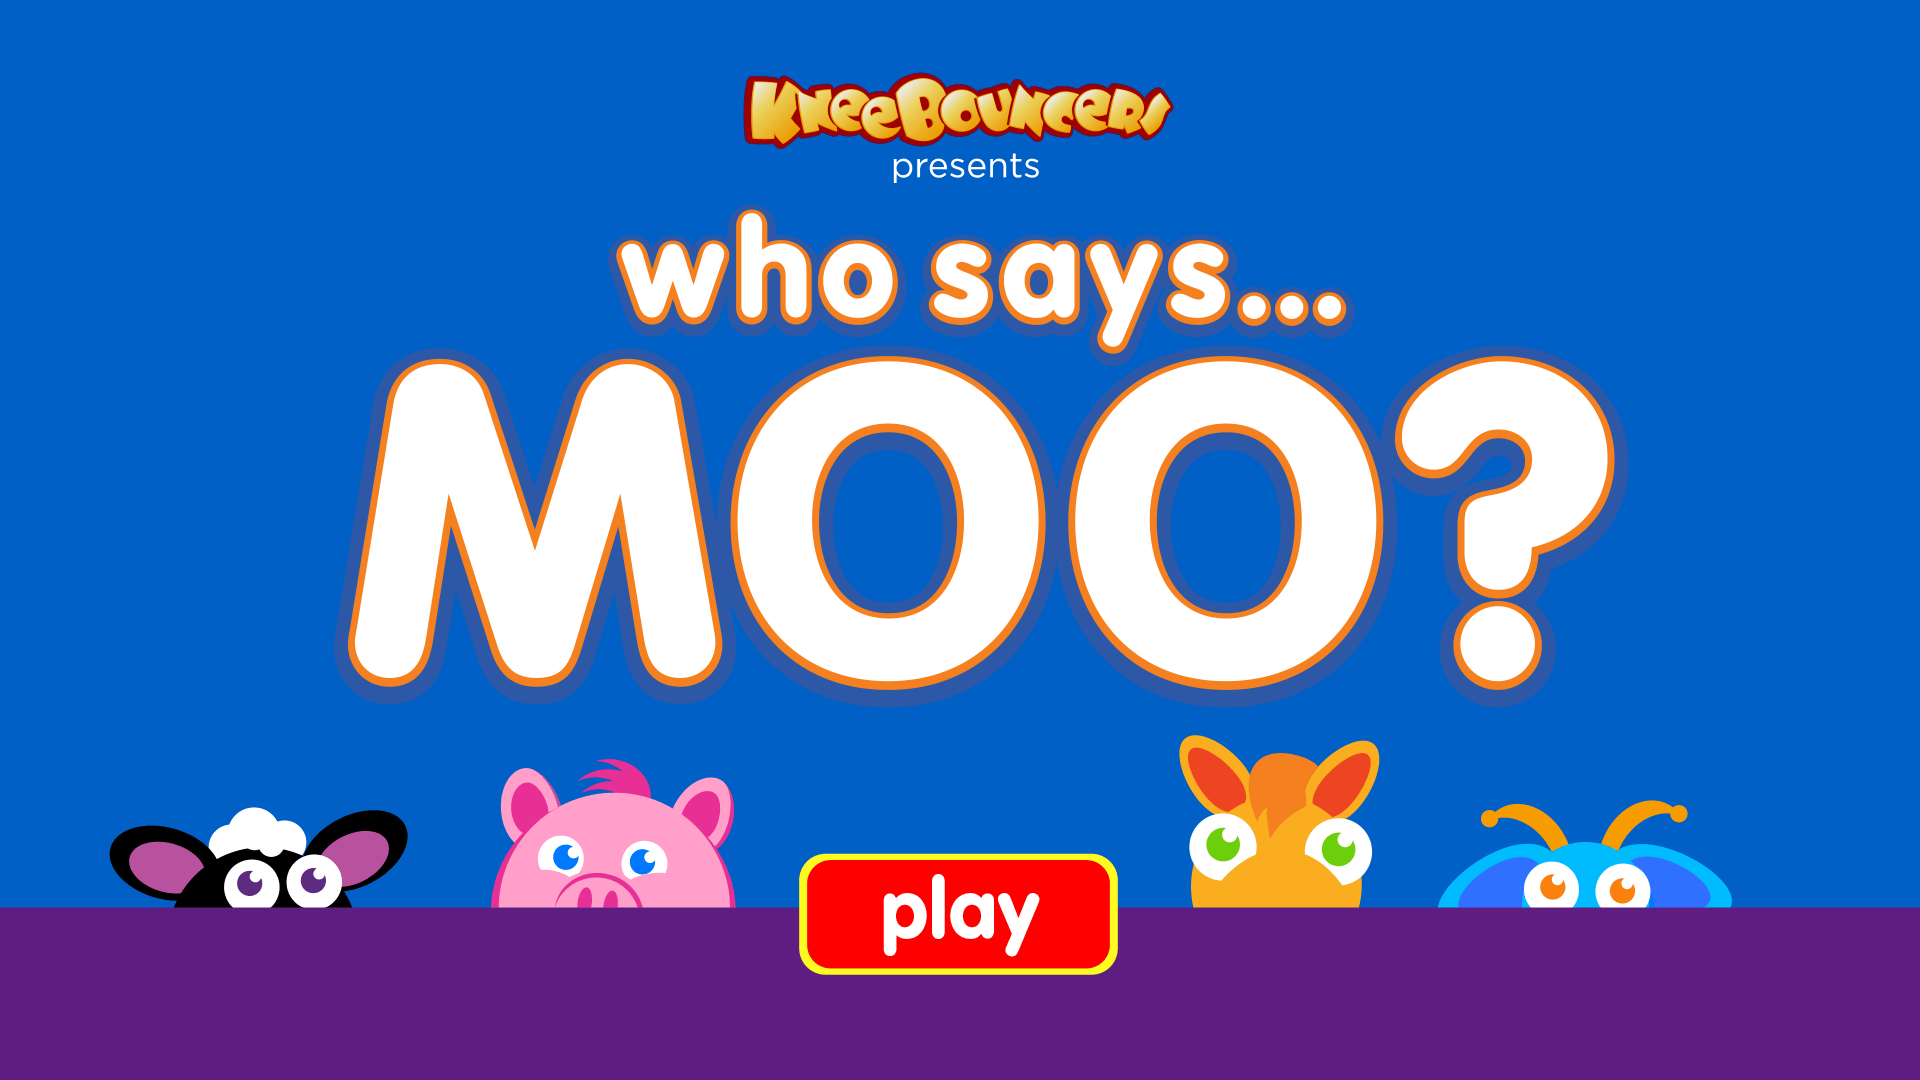 Who Says Moo?